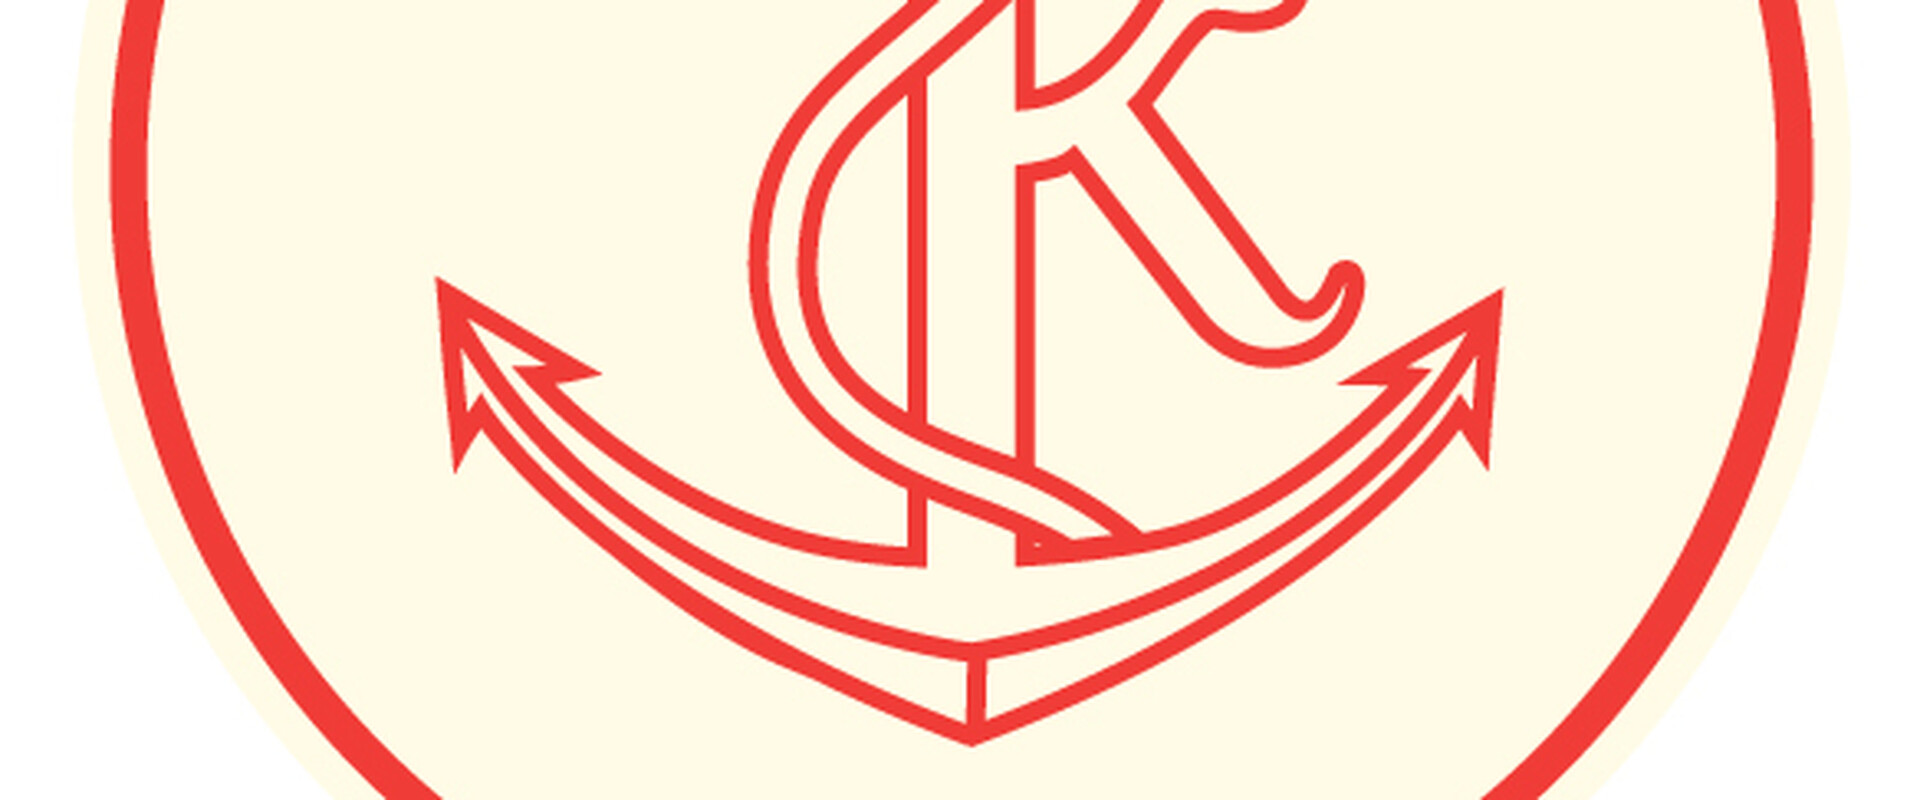 Kristiinankaupunki logo pun nega rgb7